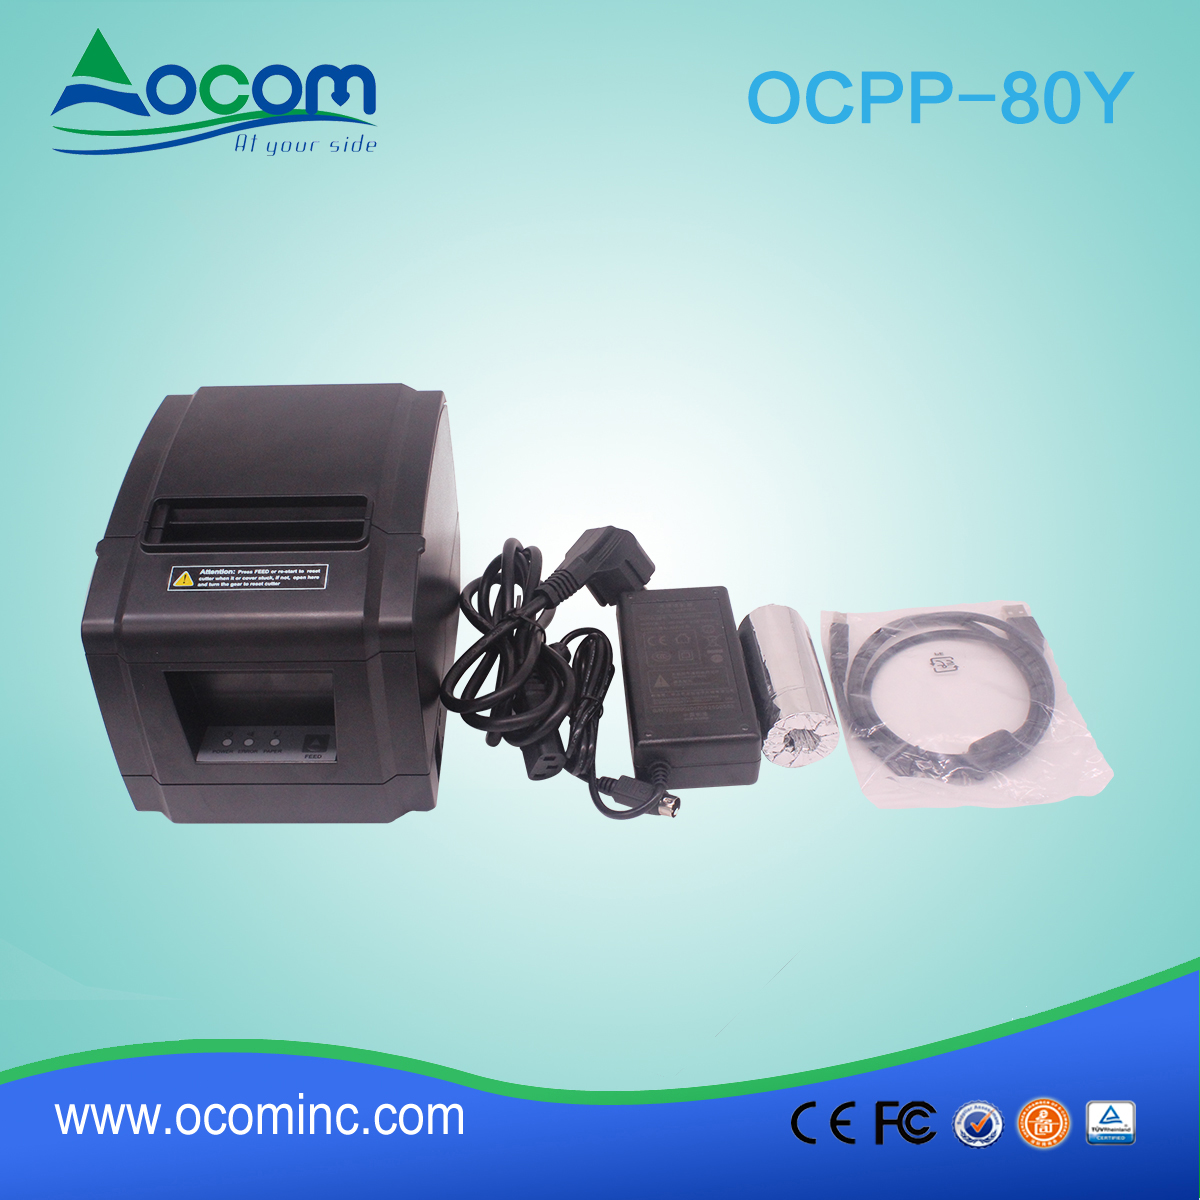 Vendita calda di stampante termica per ricevute 80mm a basso costo OCPP-80Y-low